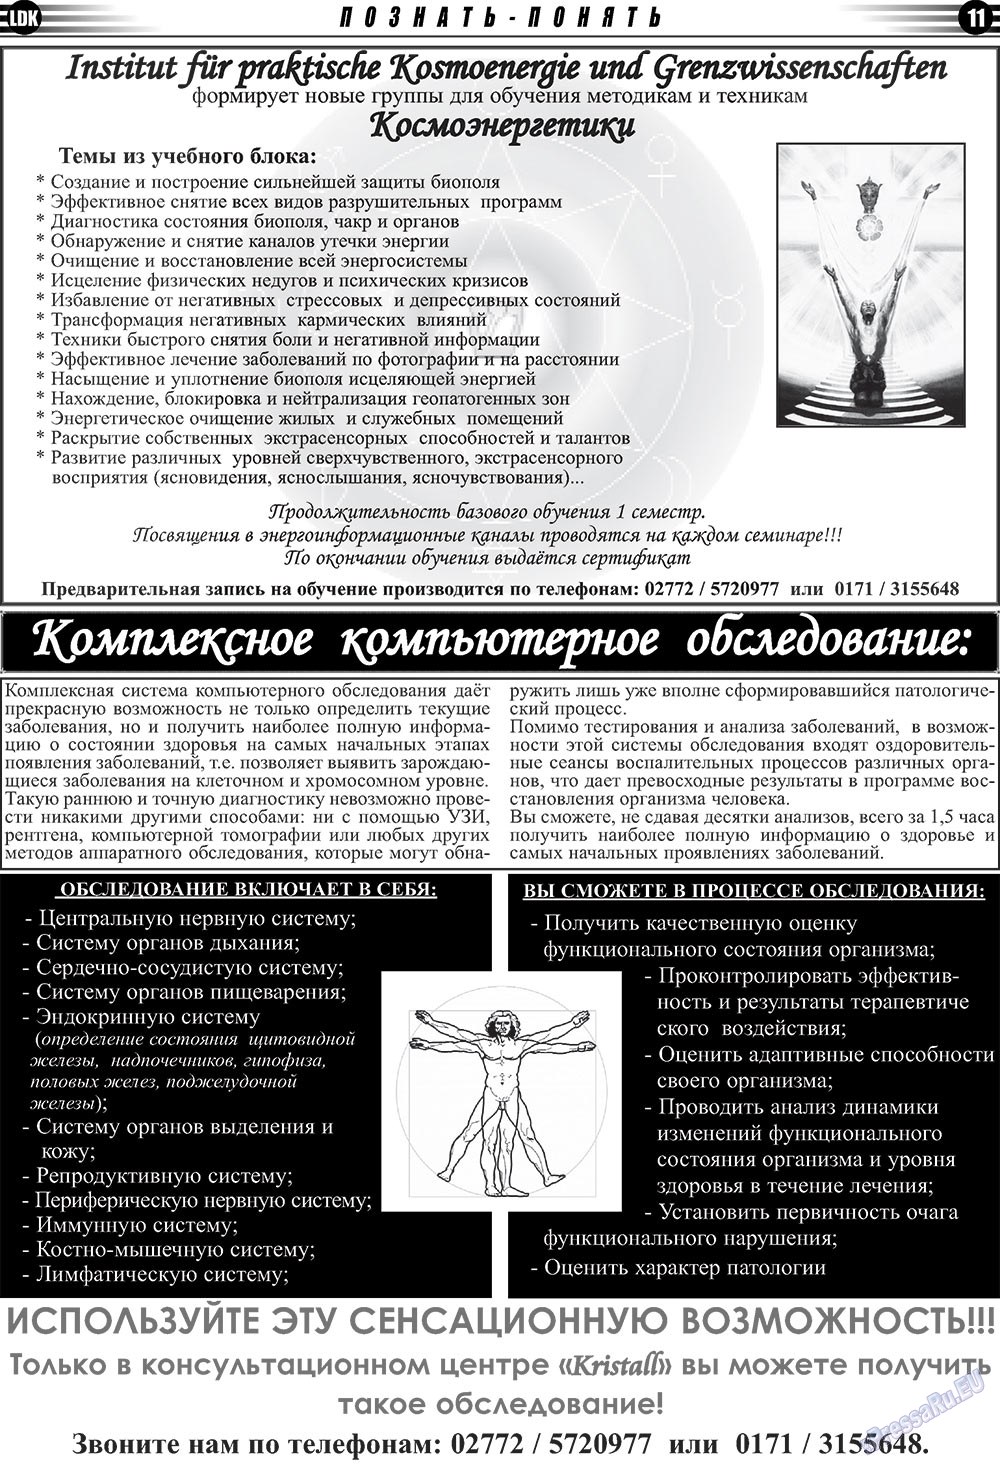 LDK по-русски, газета. 2010 №3 стр.11